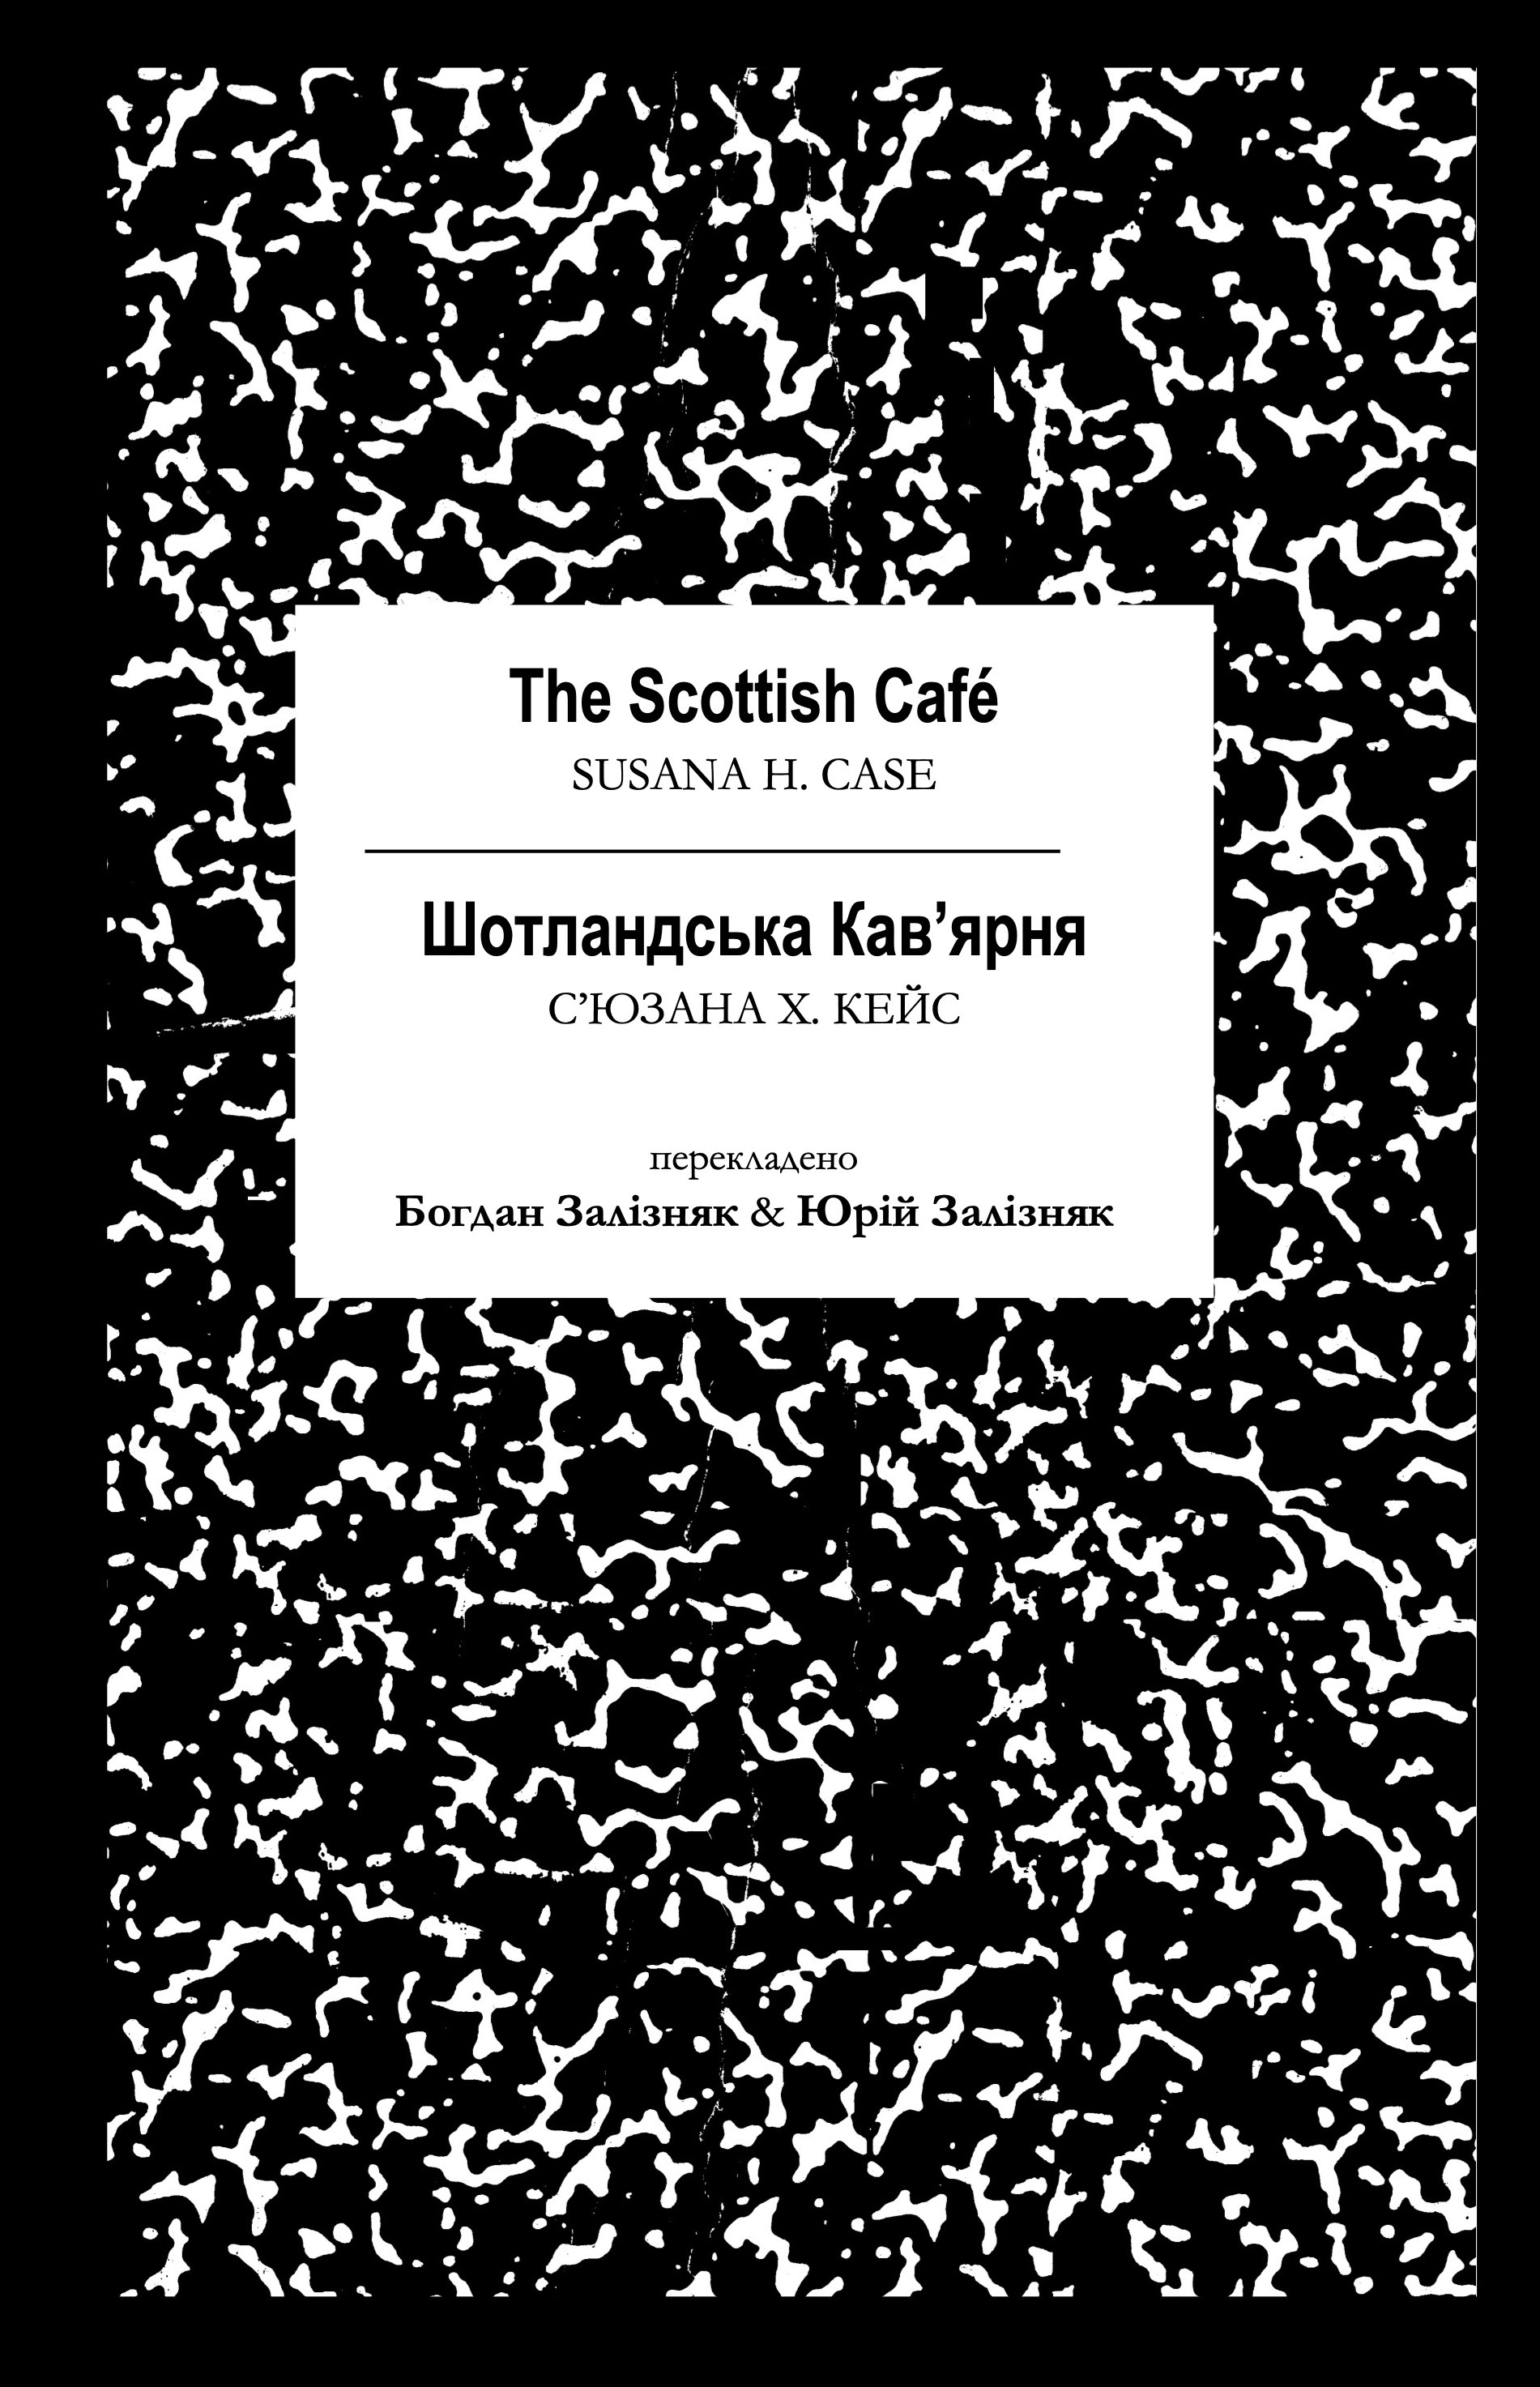 --Smaller Scottish Cafe Cover UKR 2023 JPG copy